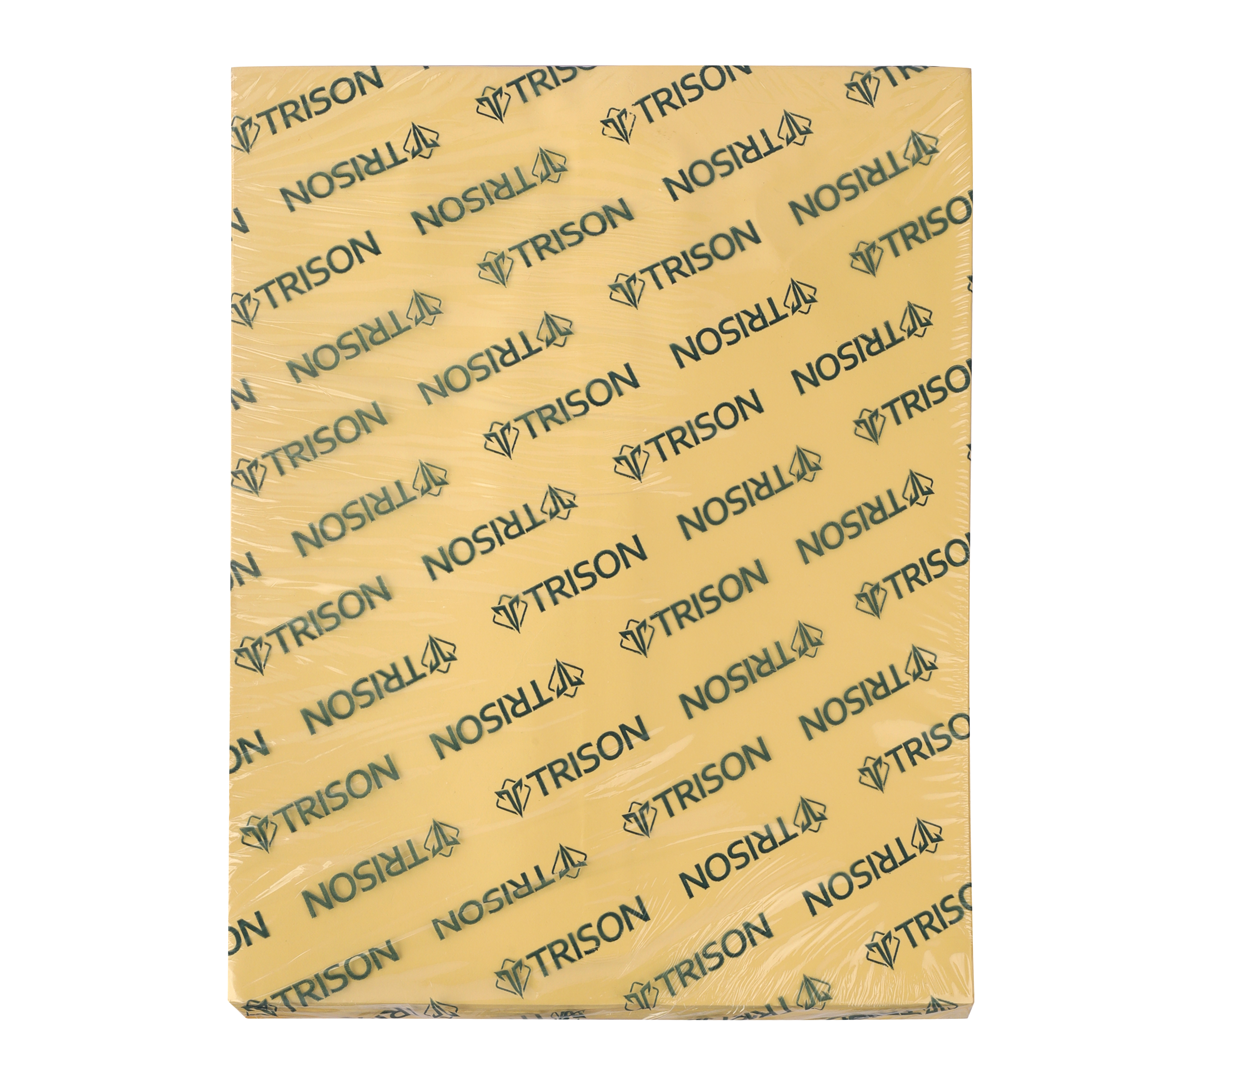 Trison Yellow Laminated Envelopes